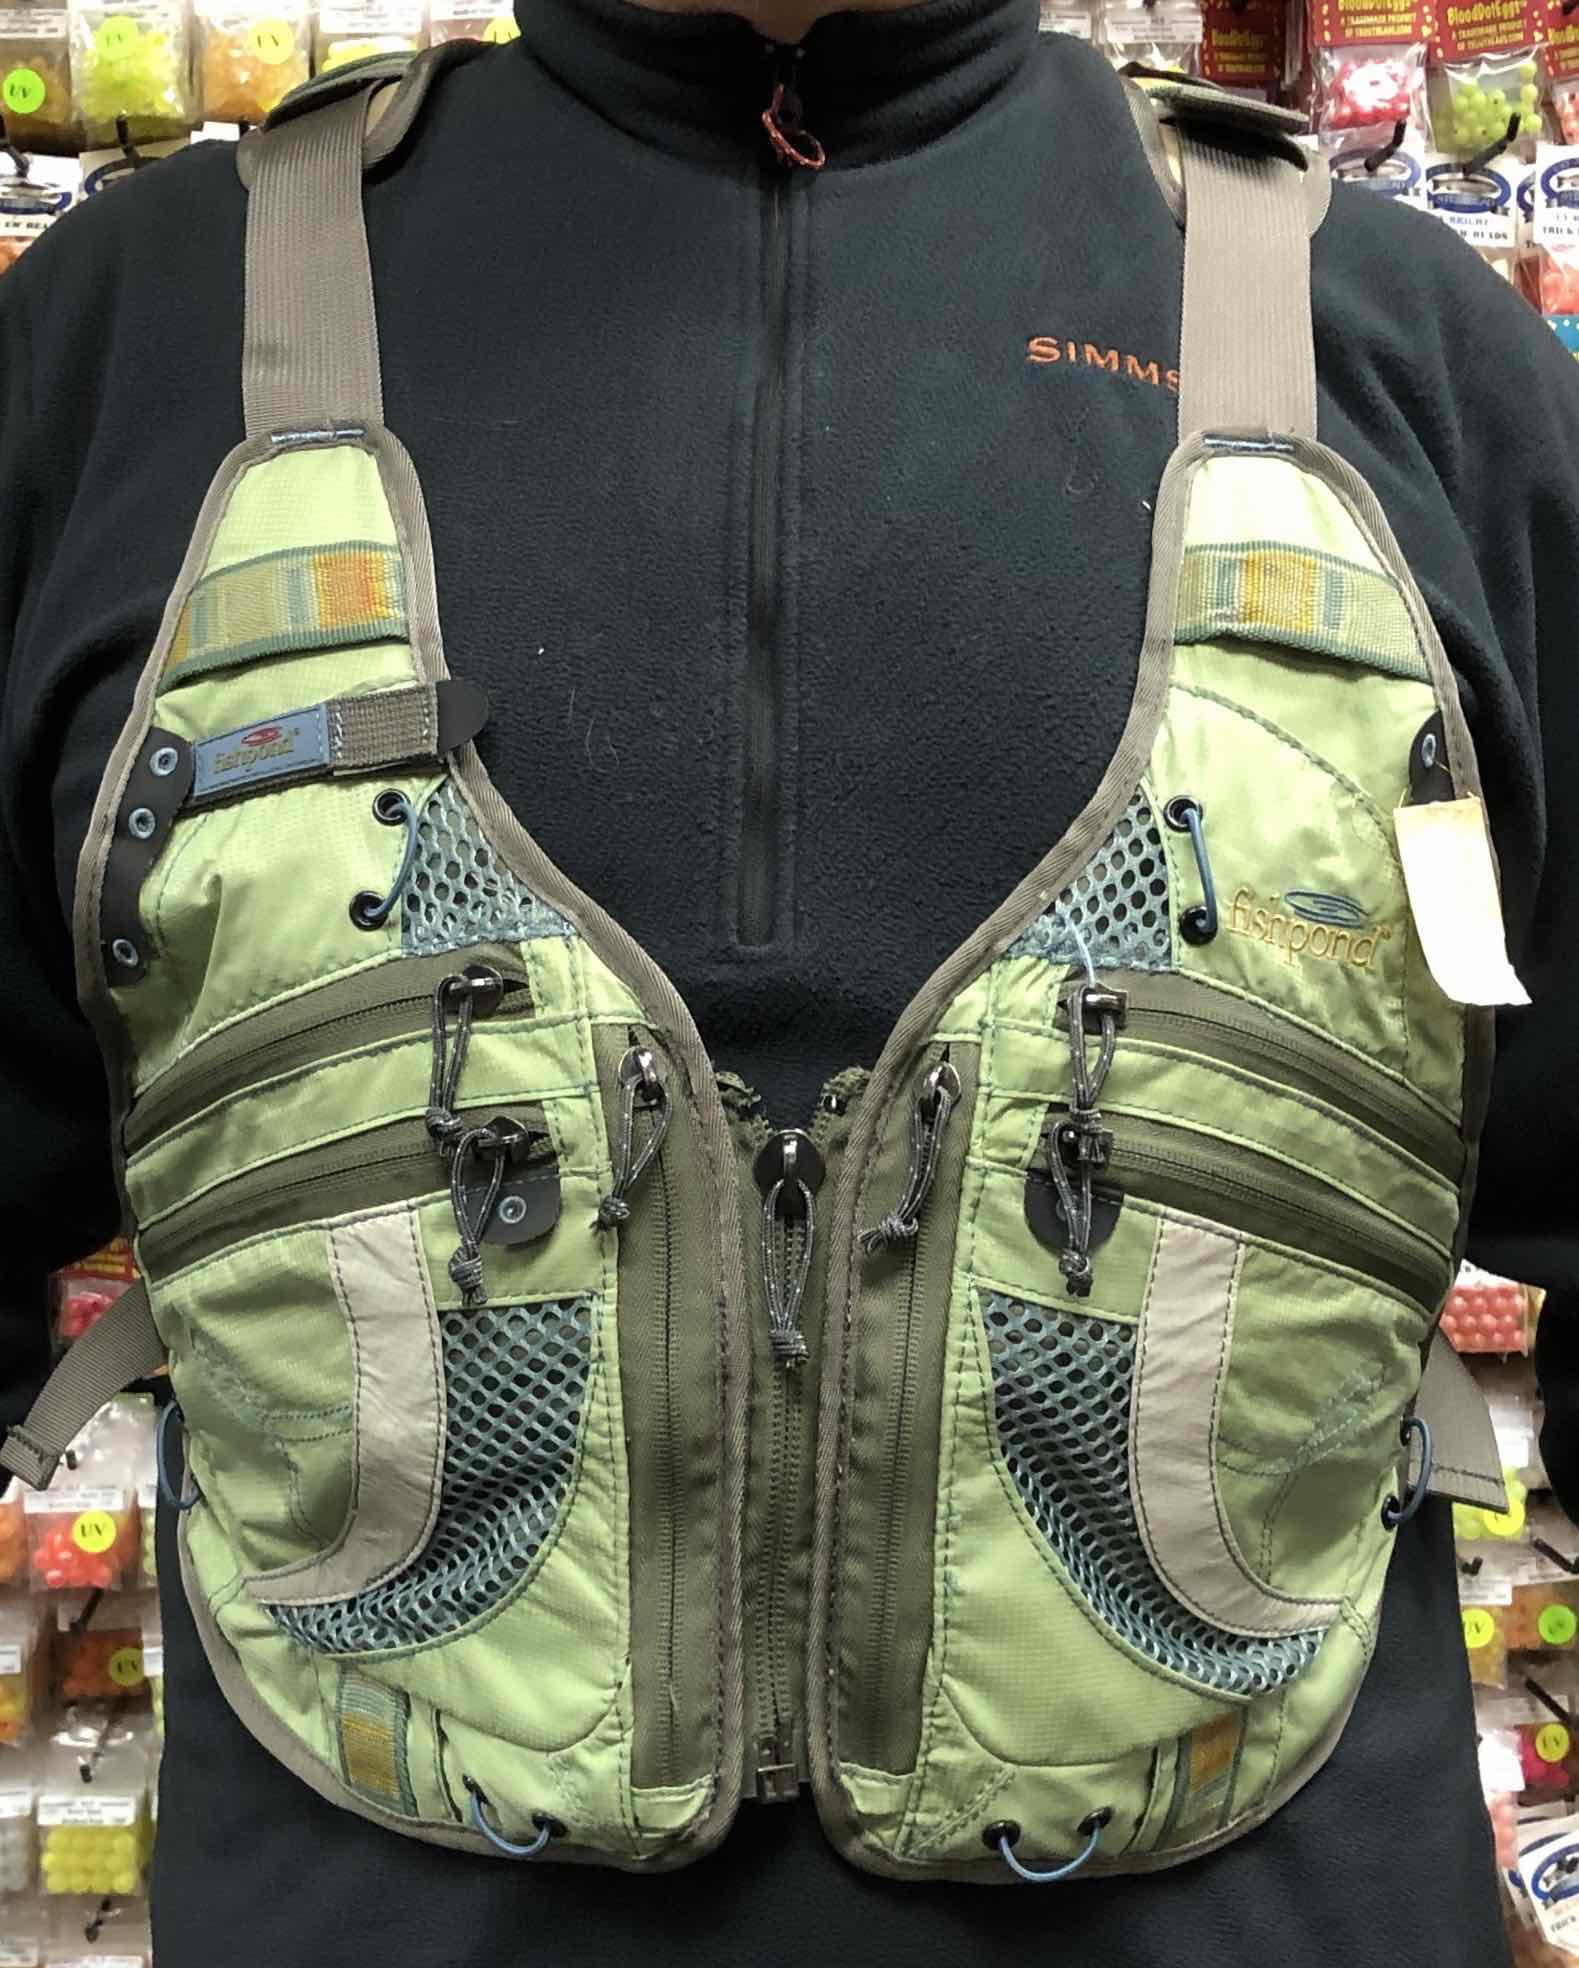 Fishpond Steelhead Vest One Size - GREAT SHAPE! - $50